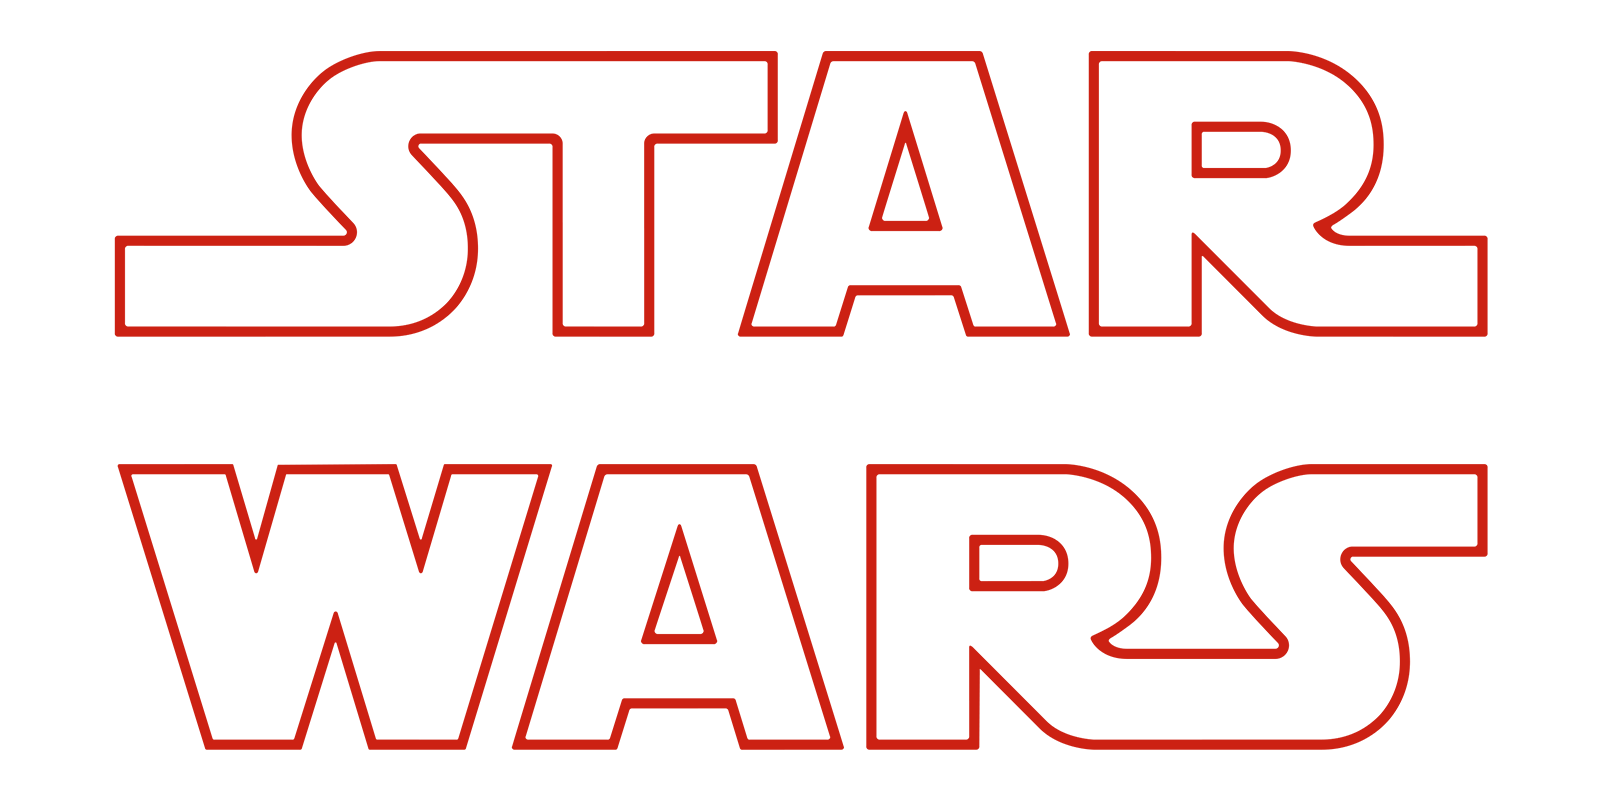 star wars the last jedi full movie watch online